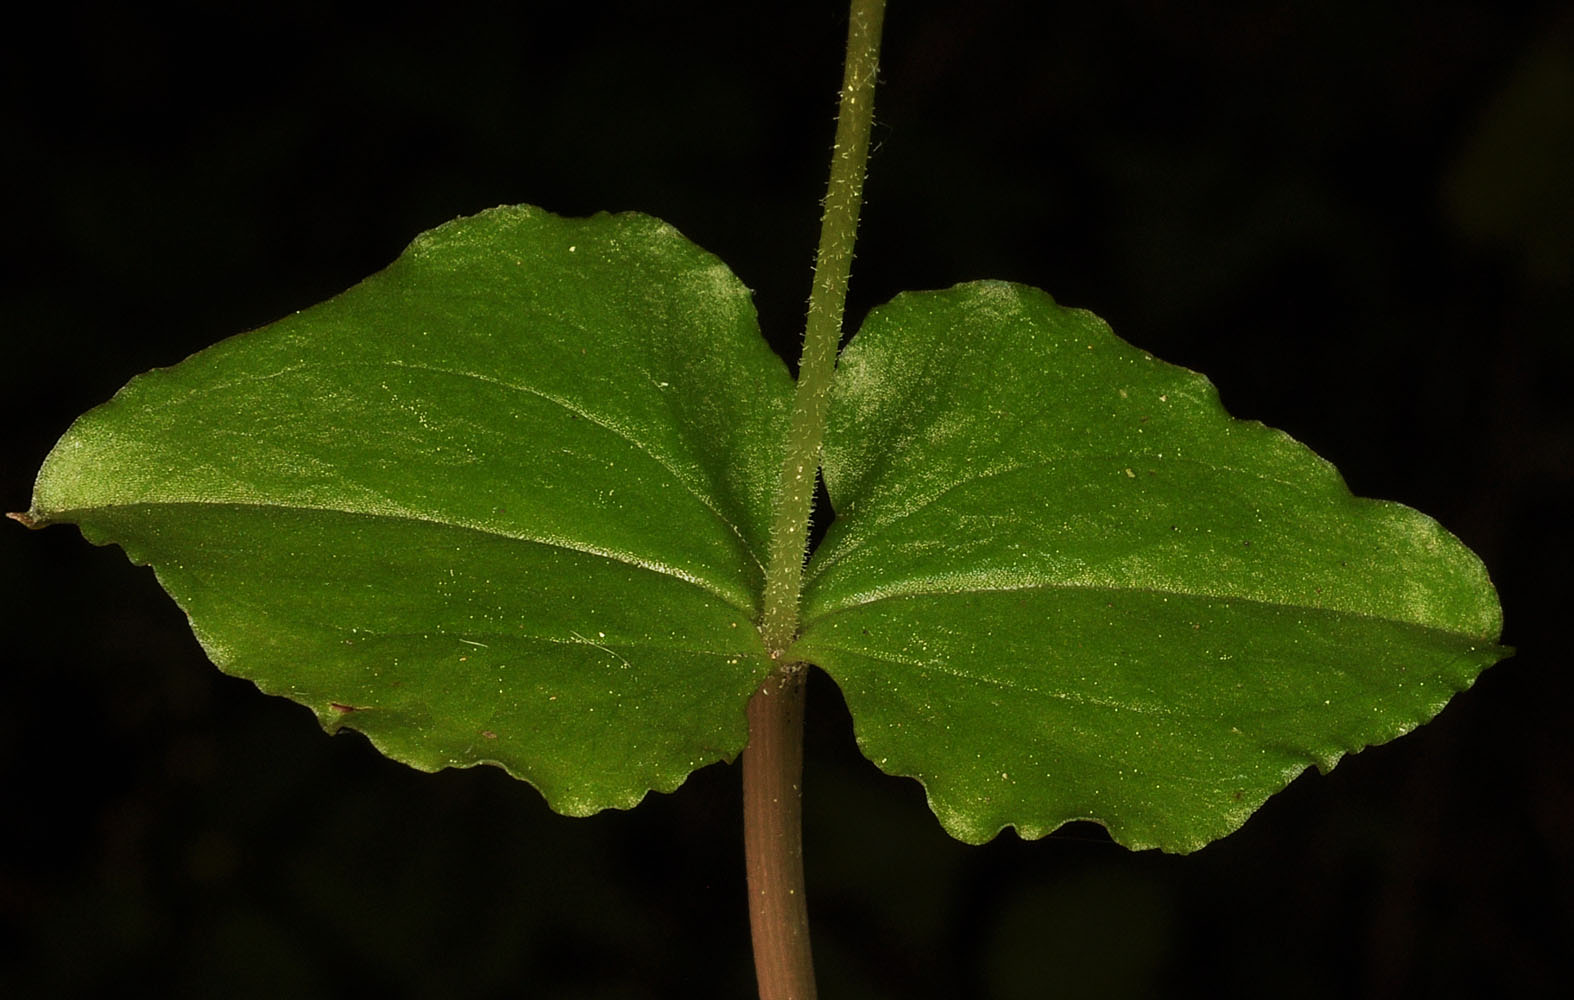 Flora of Eastern Washington Image: Neottia cordata